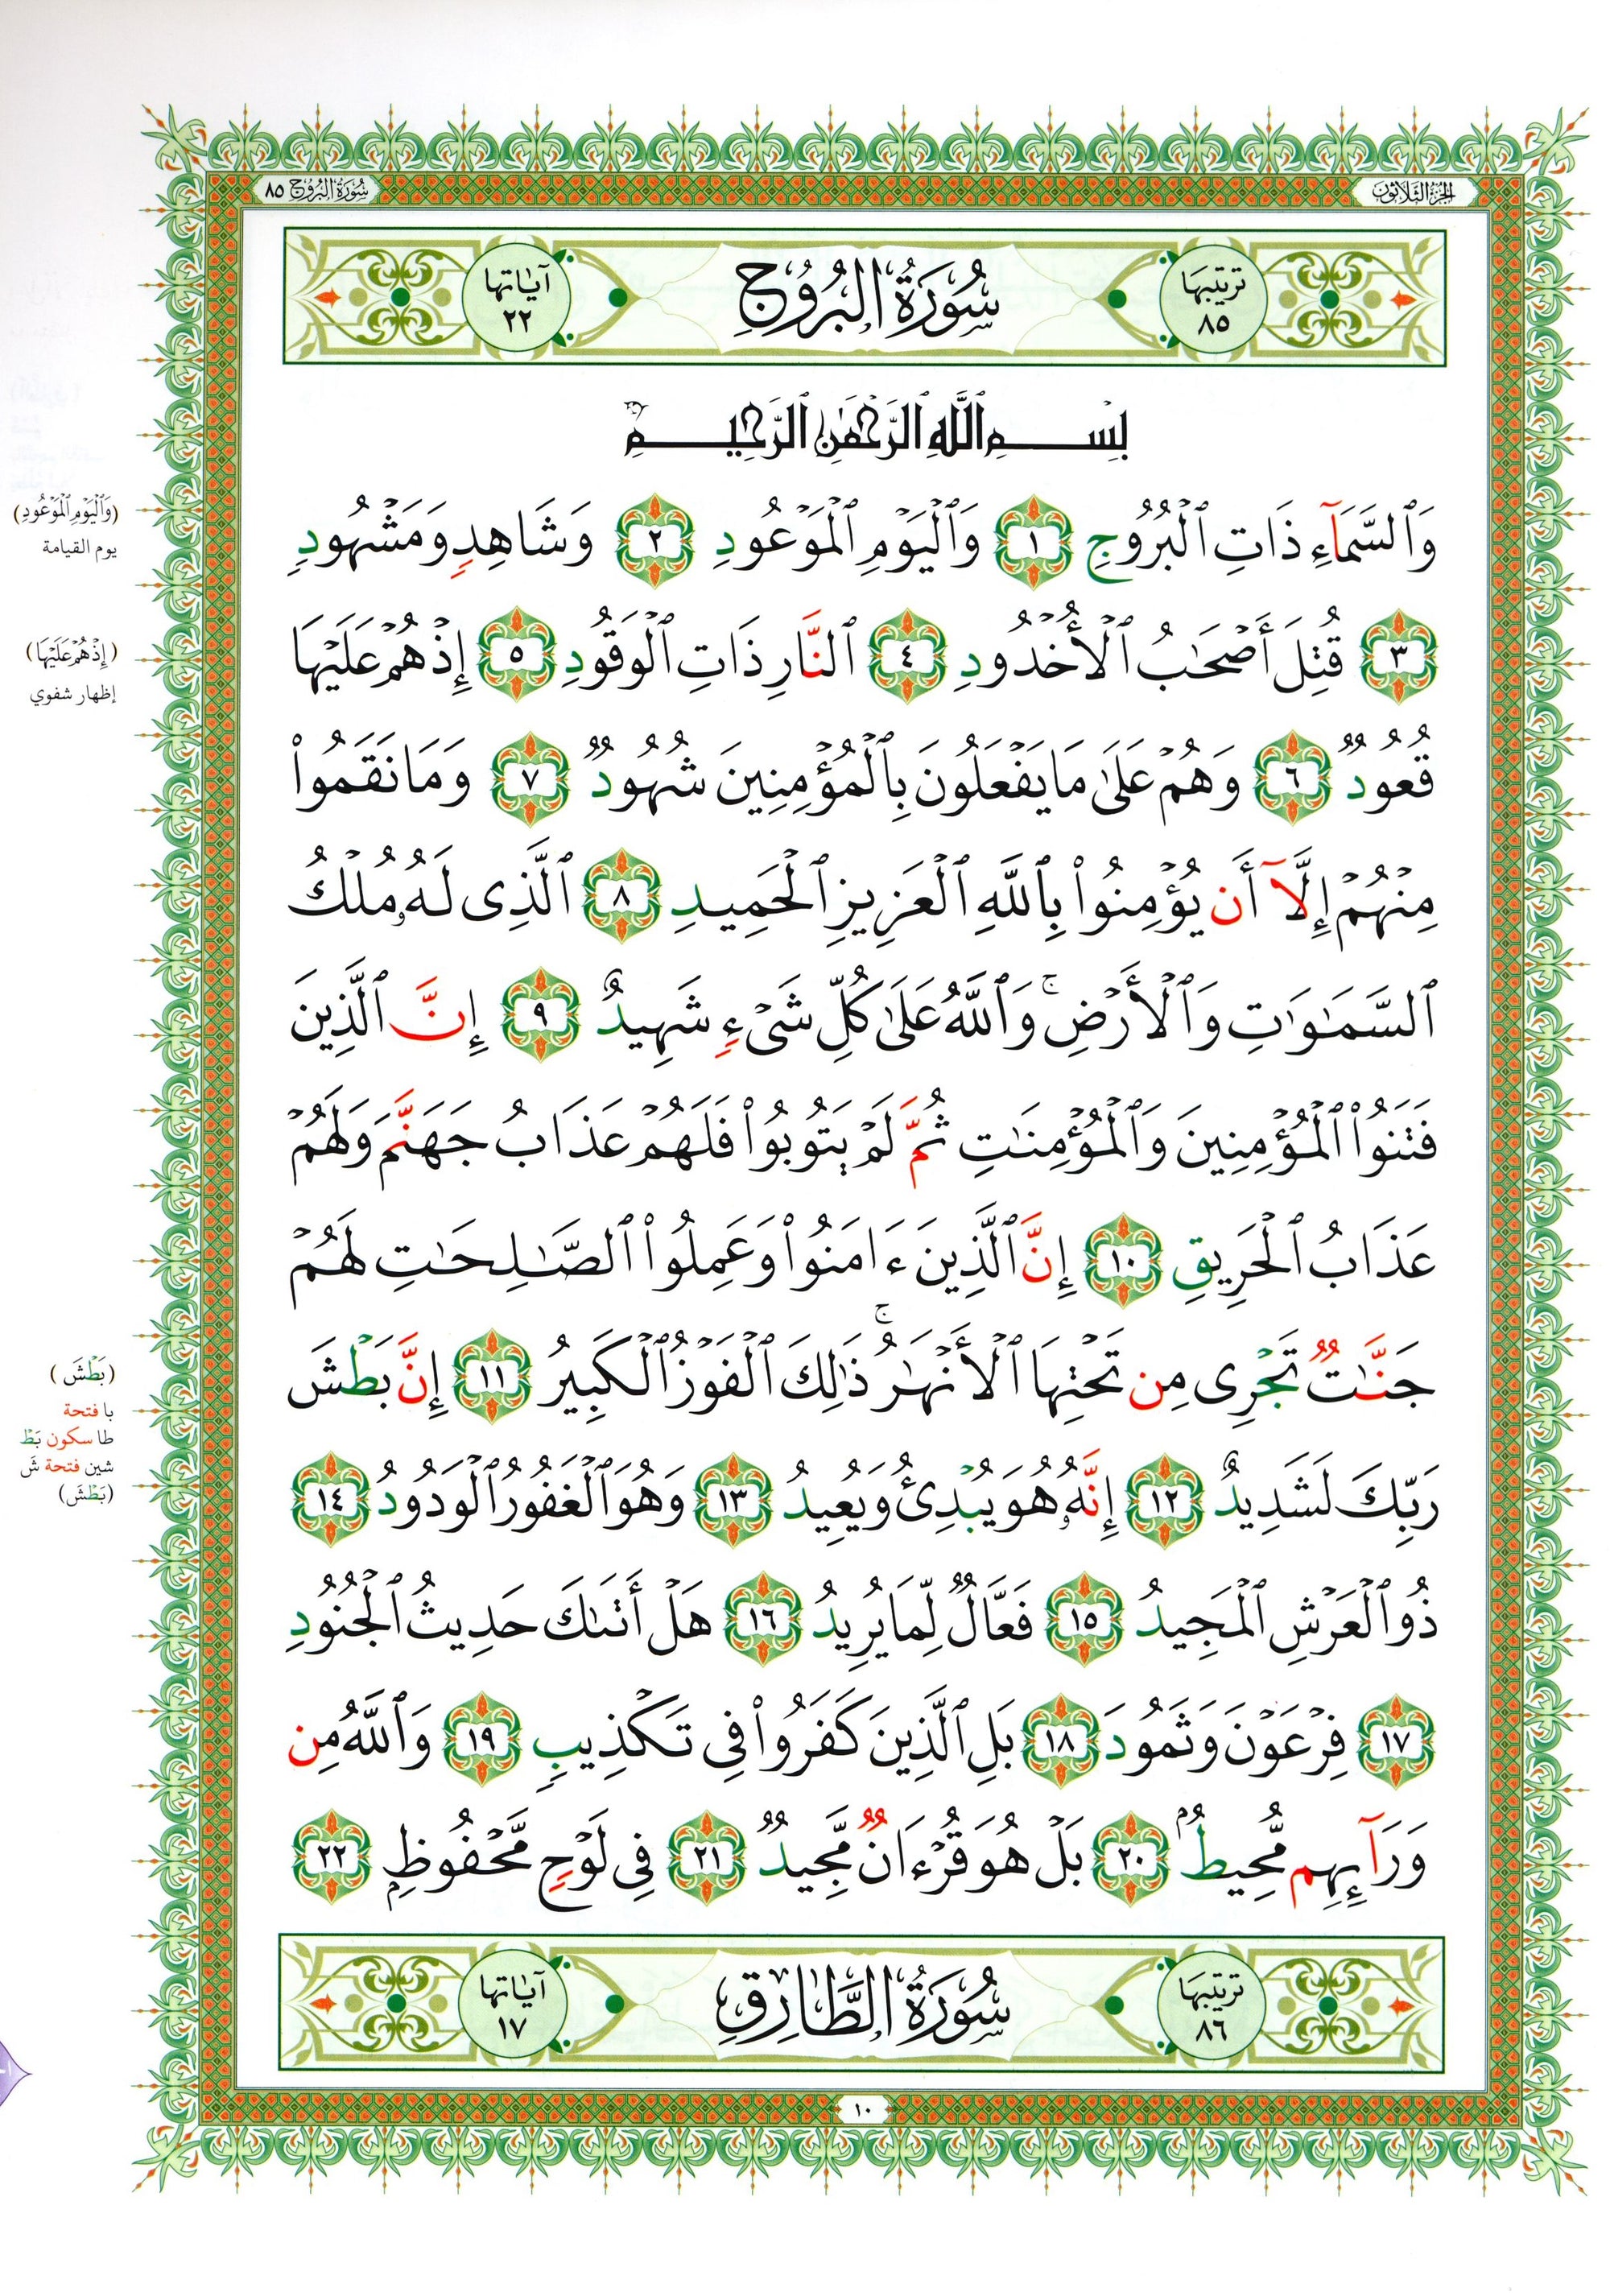 Al-Qaidah An-Noraniah - Juz’ Amma & Suratul-Fatihah for Beginners Large Size 7 x 9 جزء عم مع سورة الفاتحة للمبتدئين